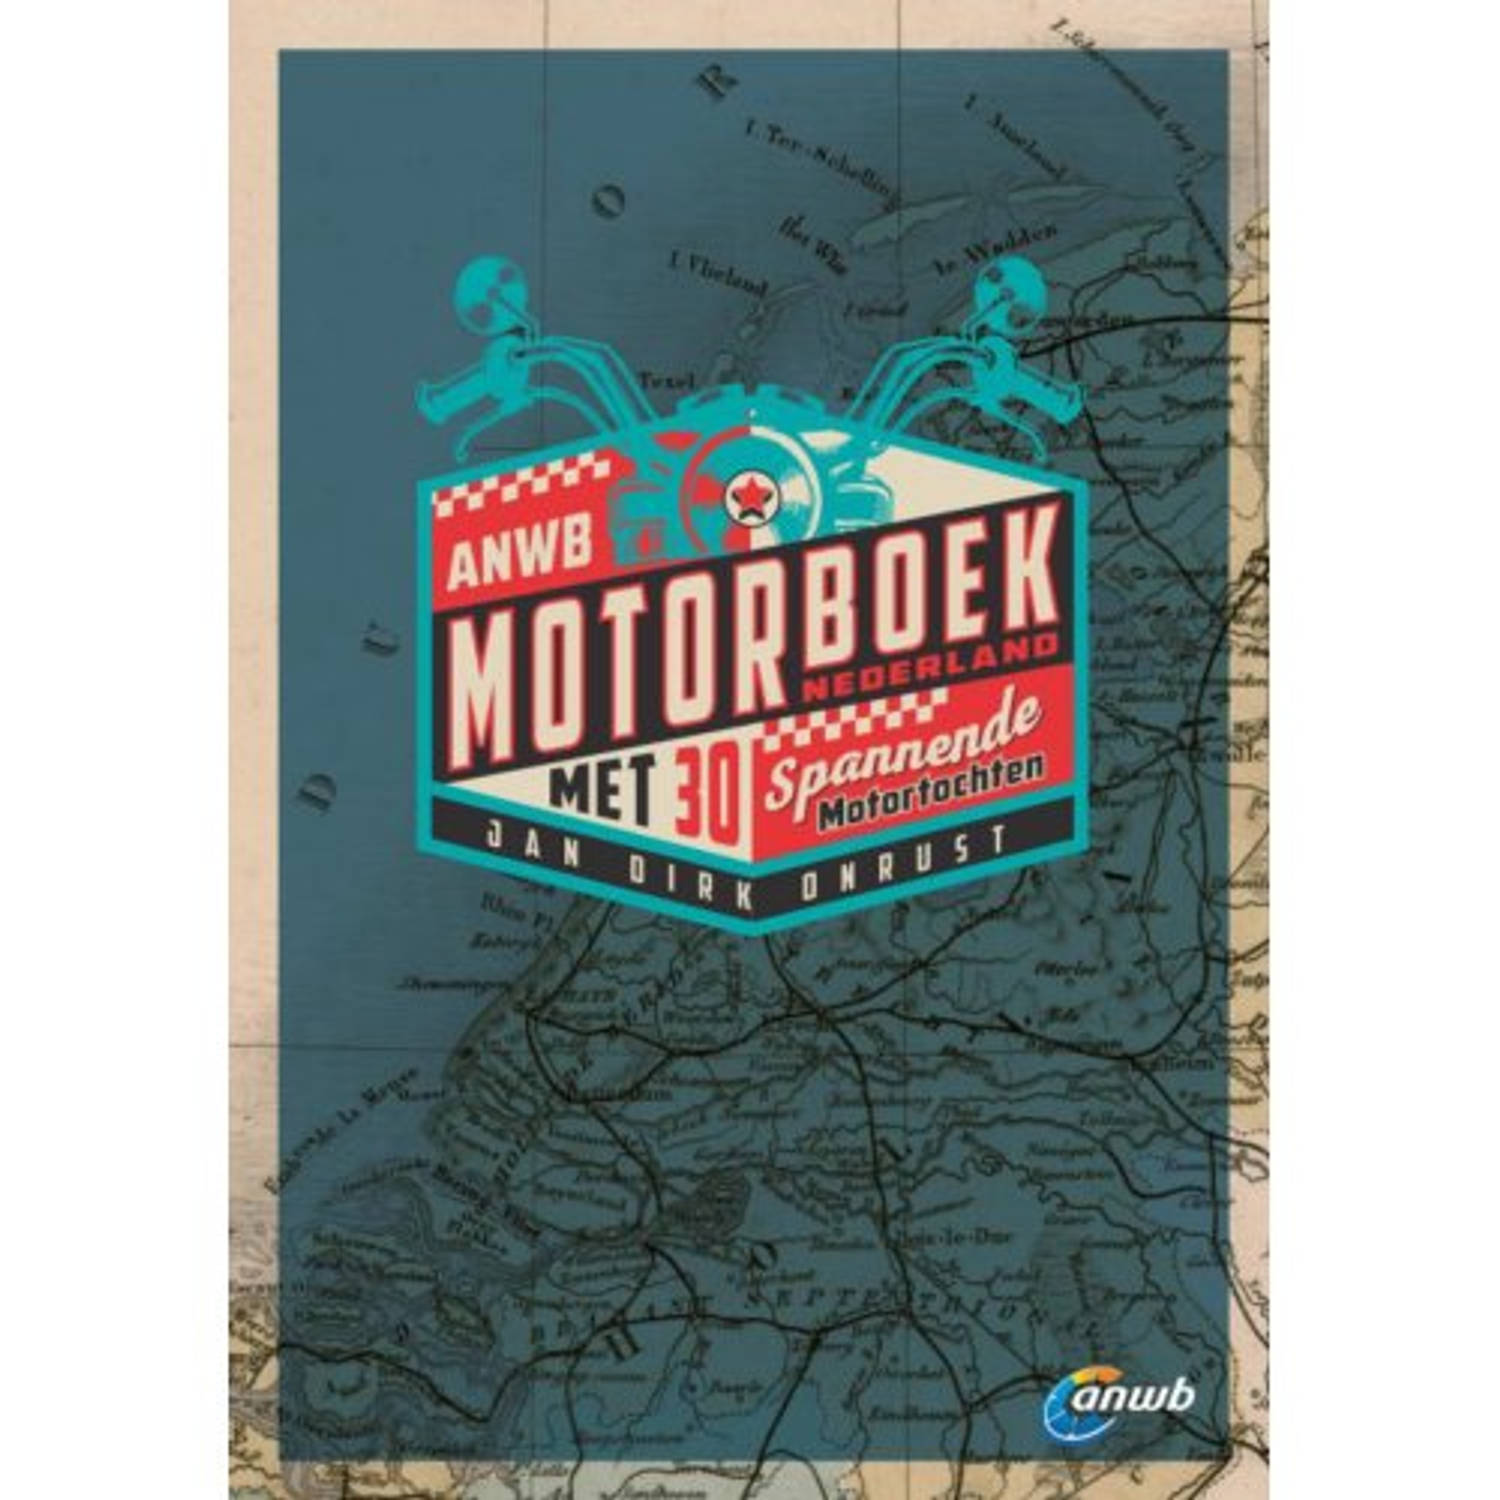 Anwb Motorboek Nederland